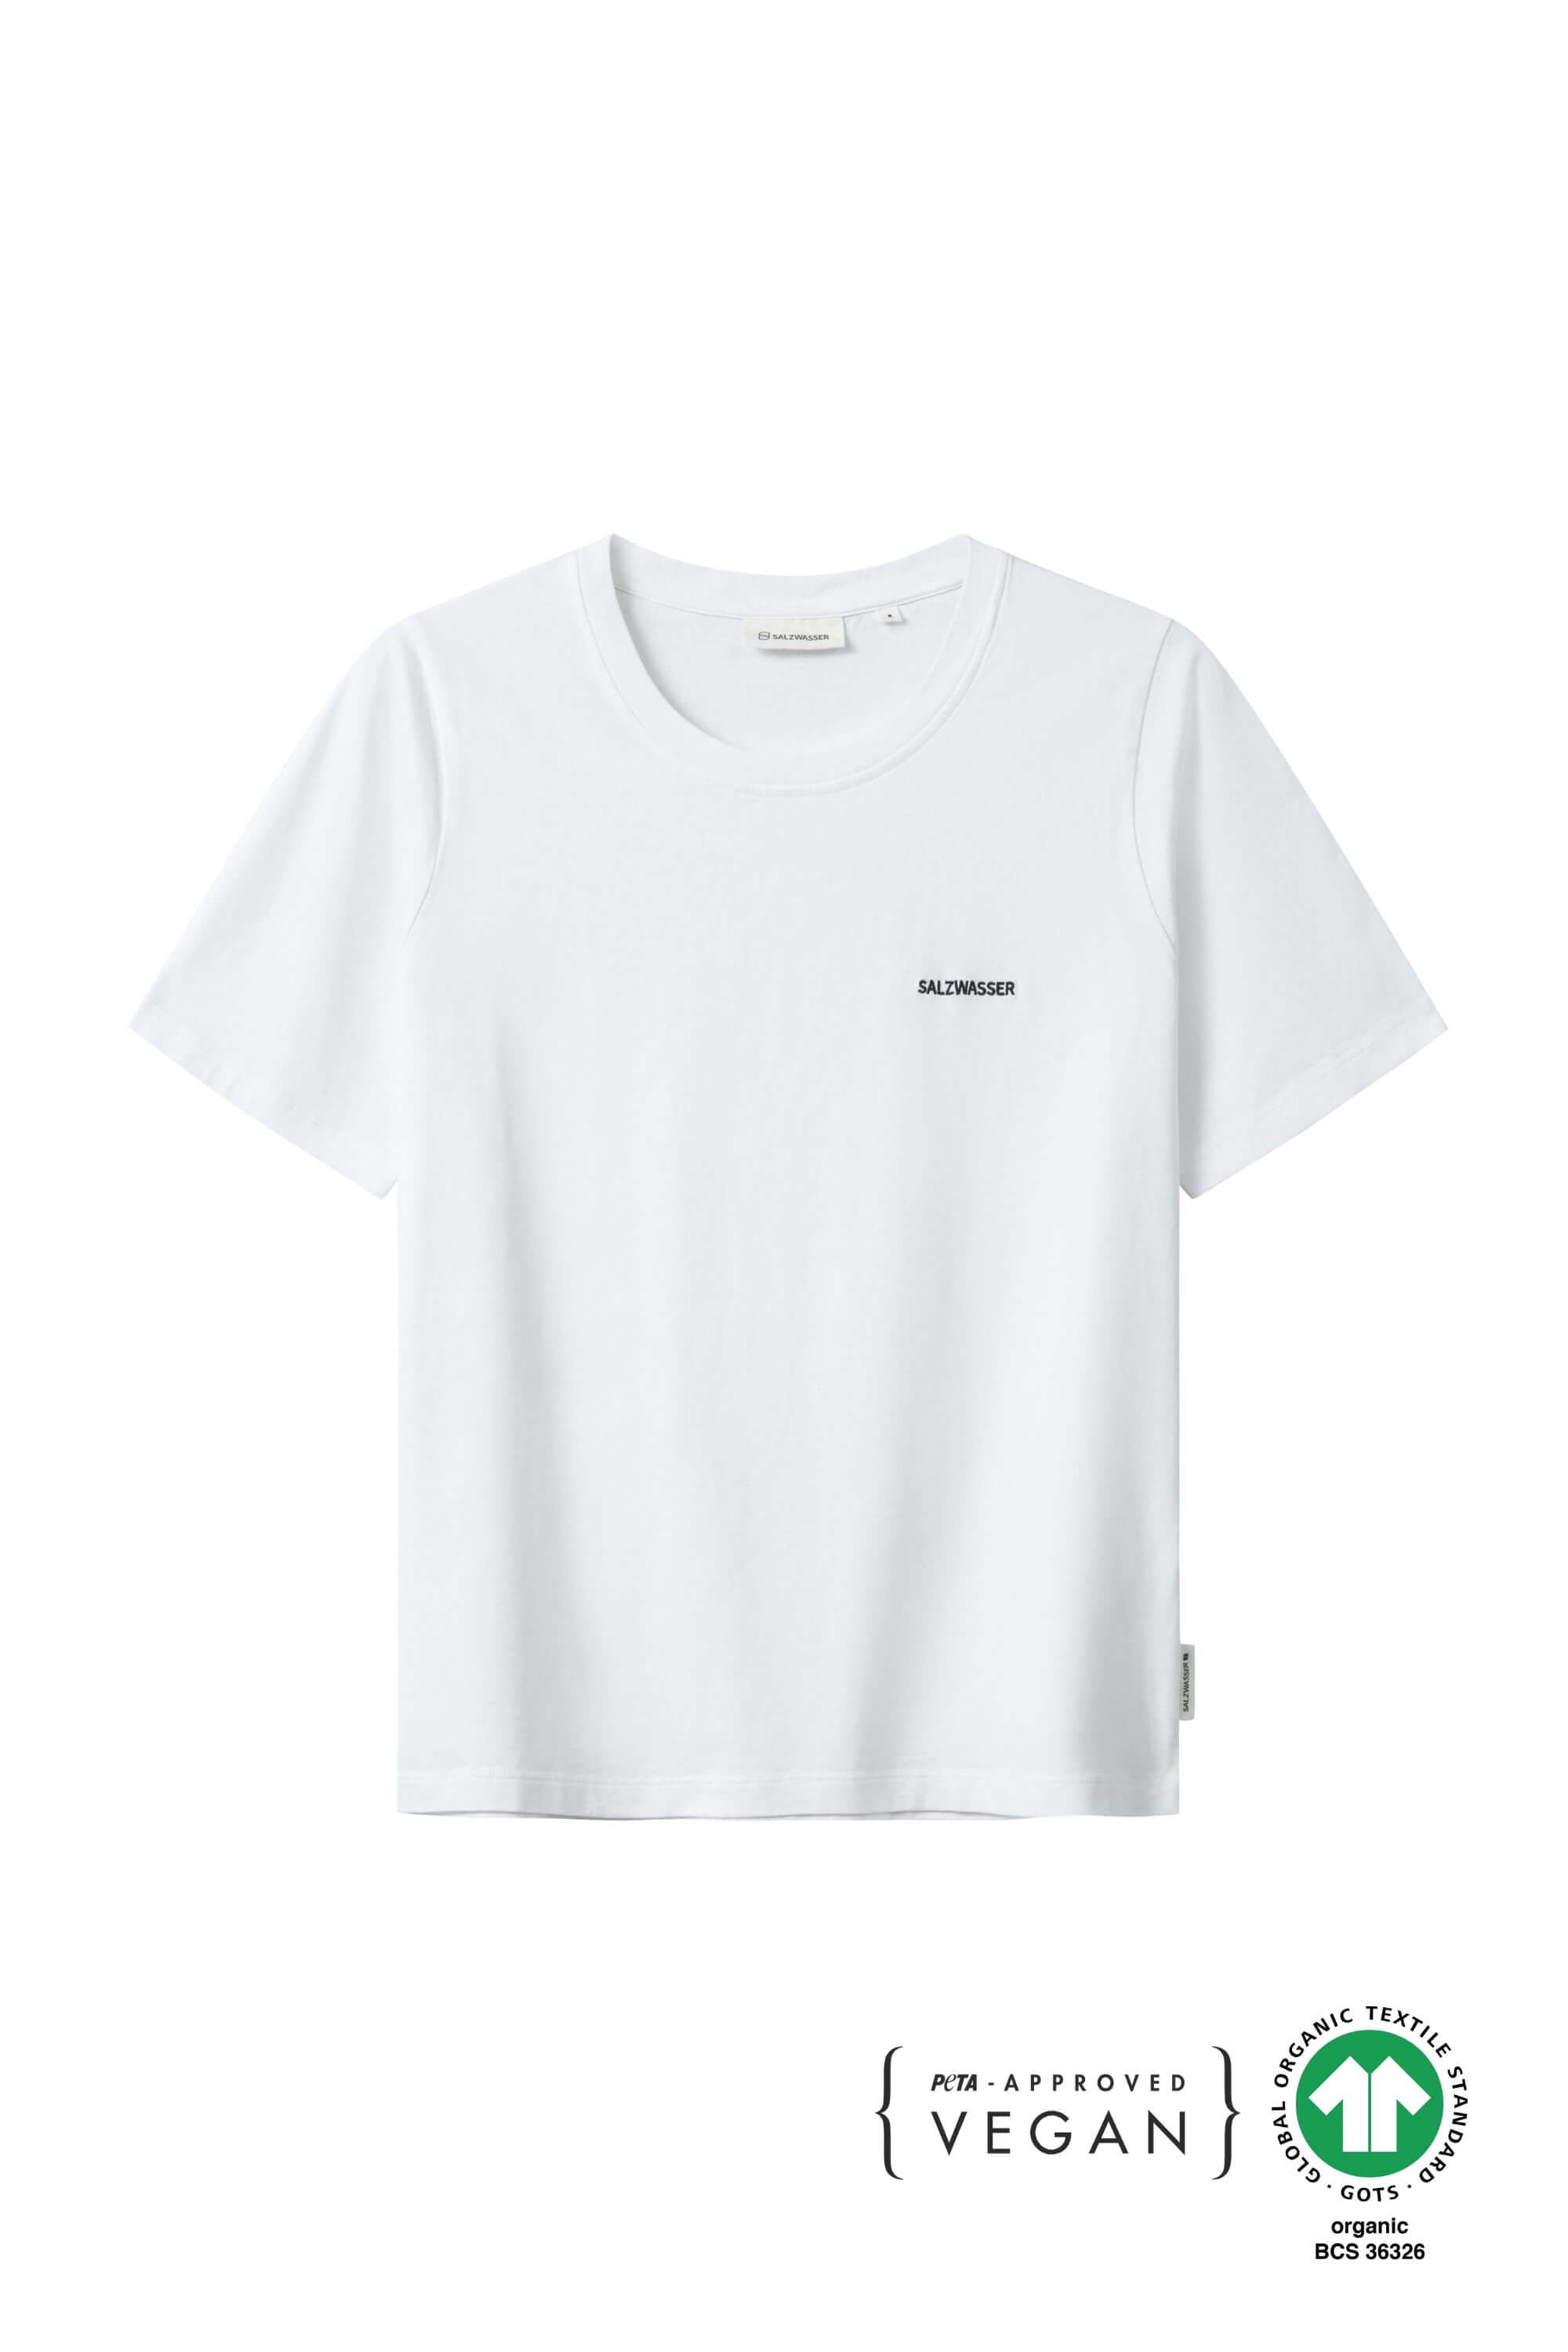 T-shirt Lova White made of organic cotton from Salzwasser